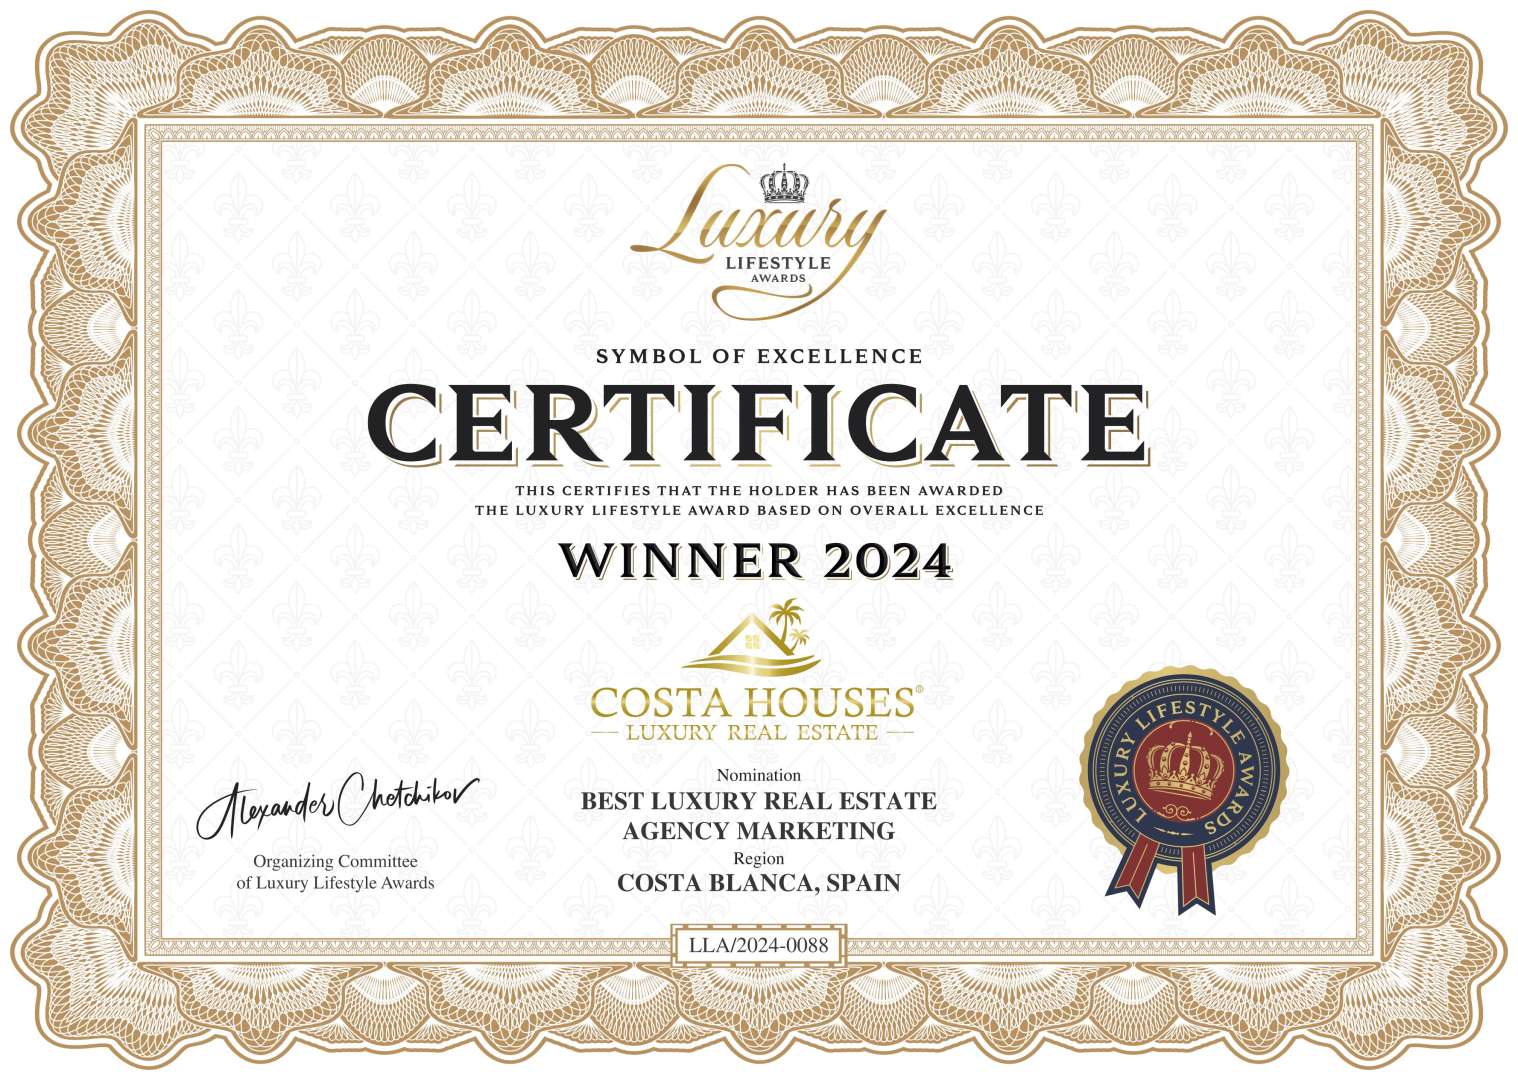 COSTA HOUSES ®️ - Winner Luxury LIFESTYLE Awards 2020, 2021, 2023 & 2024 